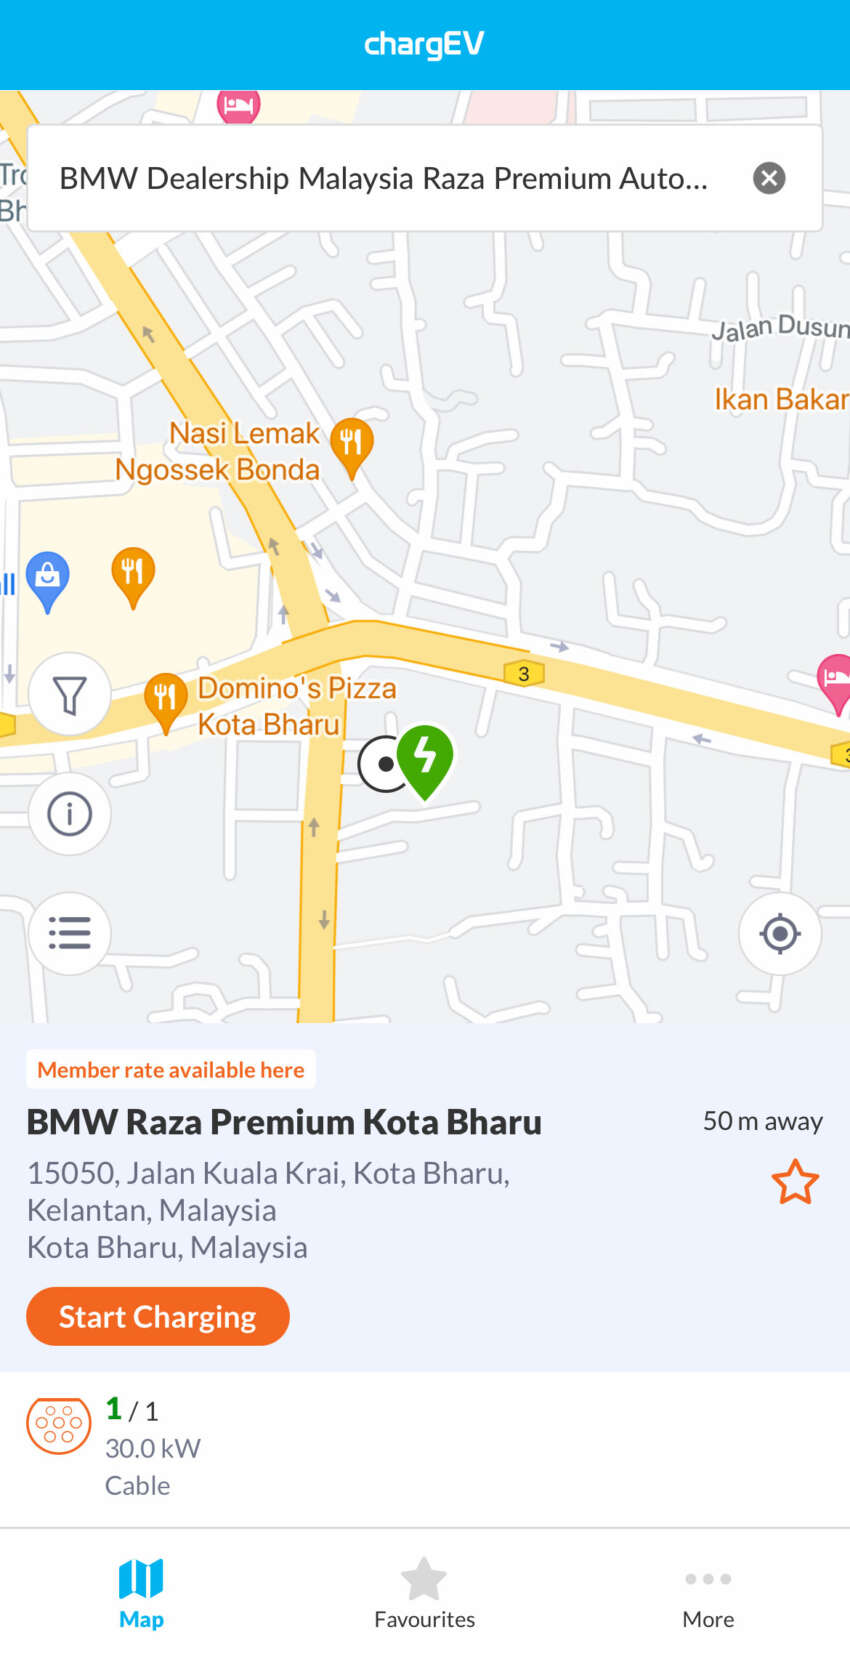 Kelantan gets its first publicly-accessible DC charger at BMW Raza Premium, Kota Bharu – 30 kW CCS2 1582774